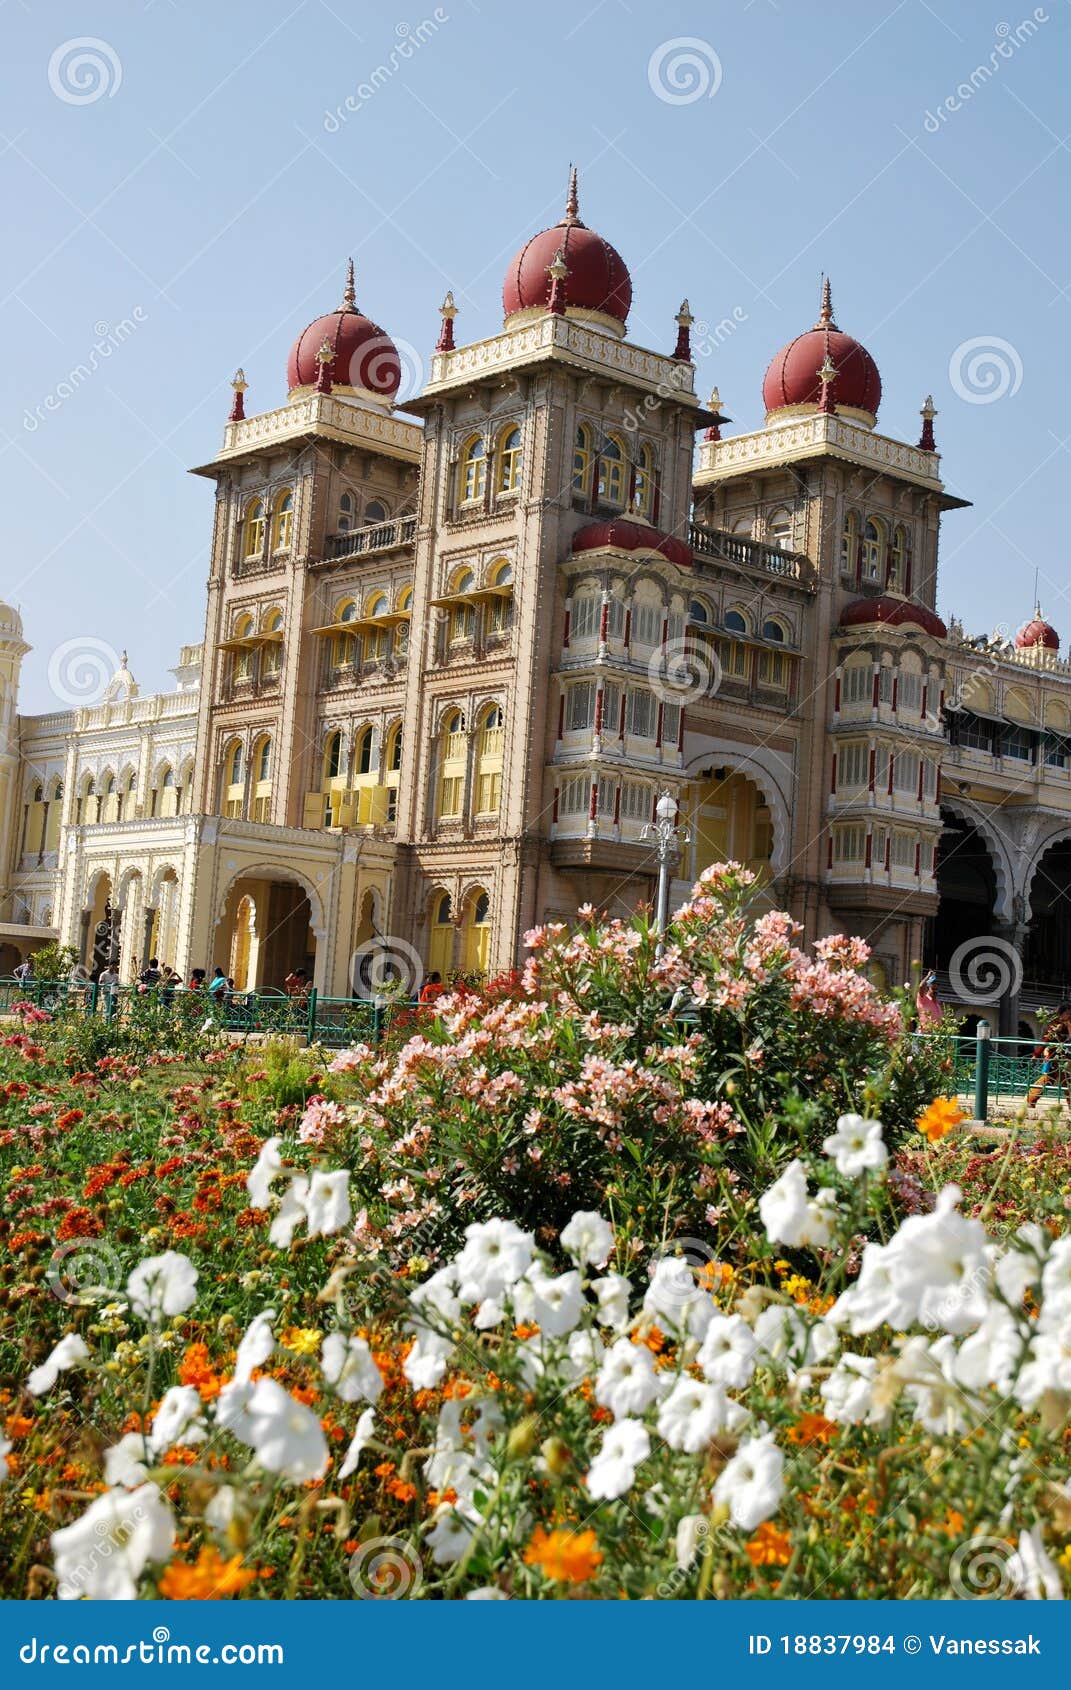 mysore palace garden in india